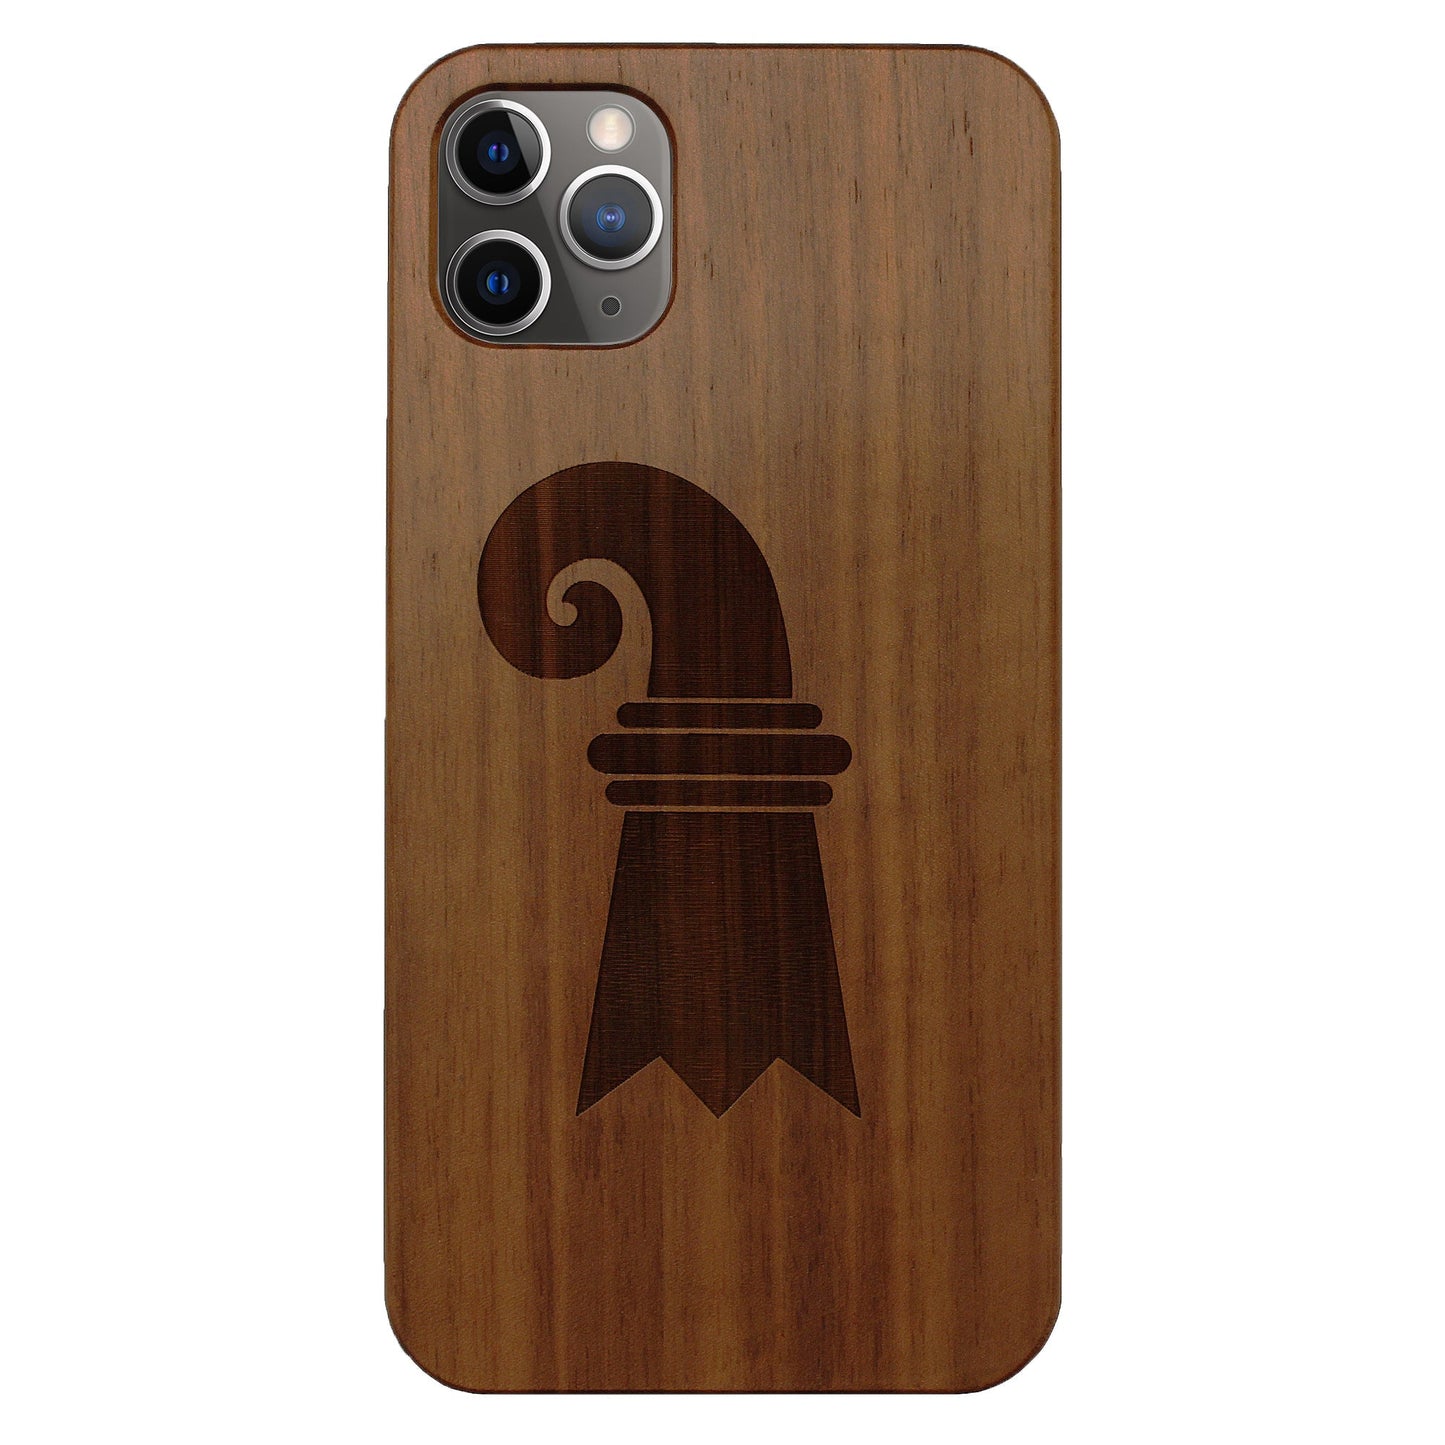 Baslerstab Eden case made of walnut wood for iPhone 11 Pro